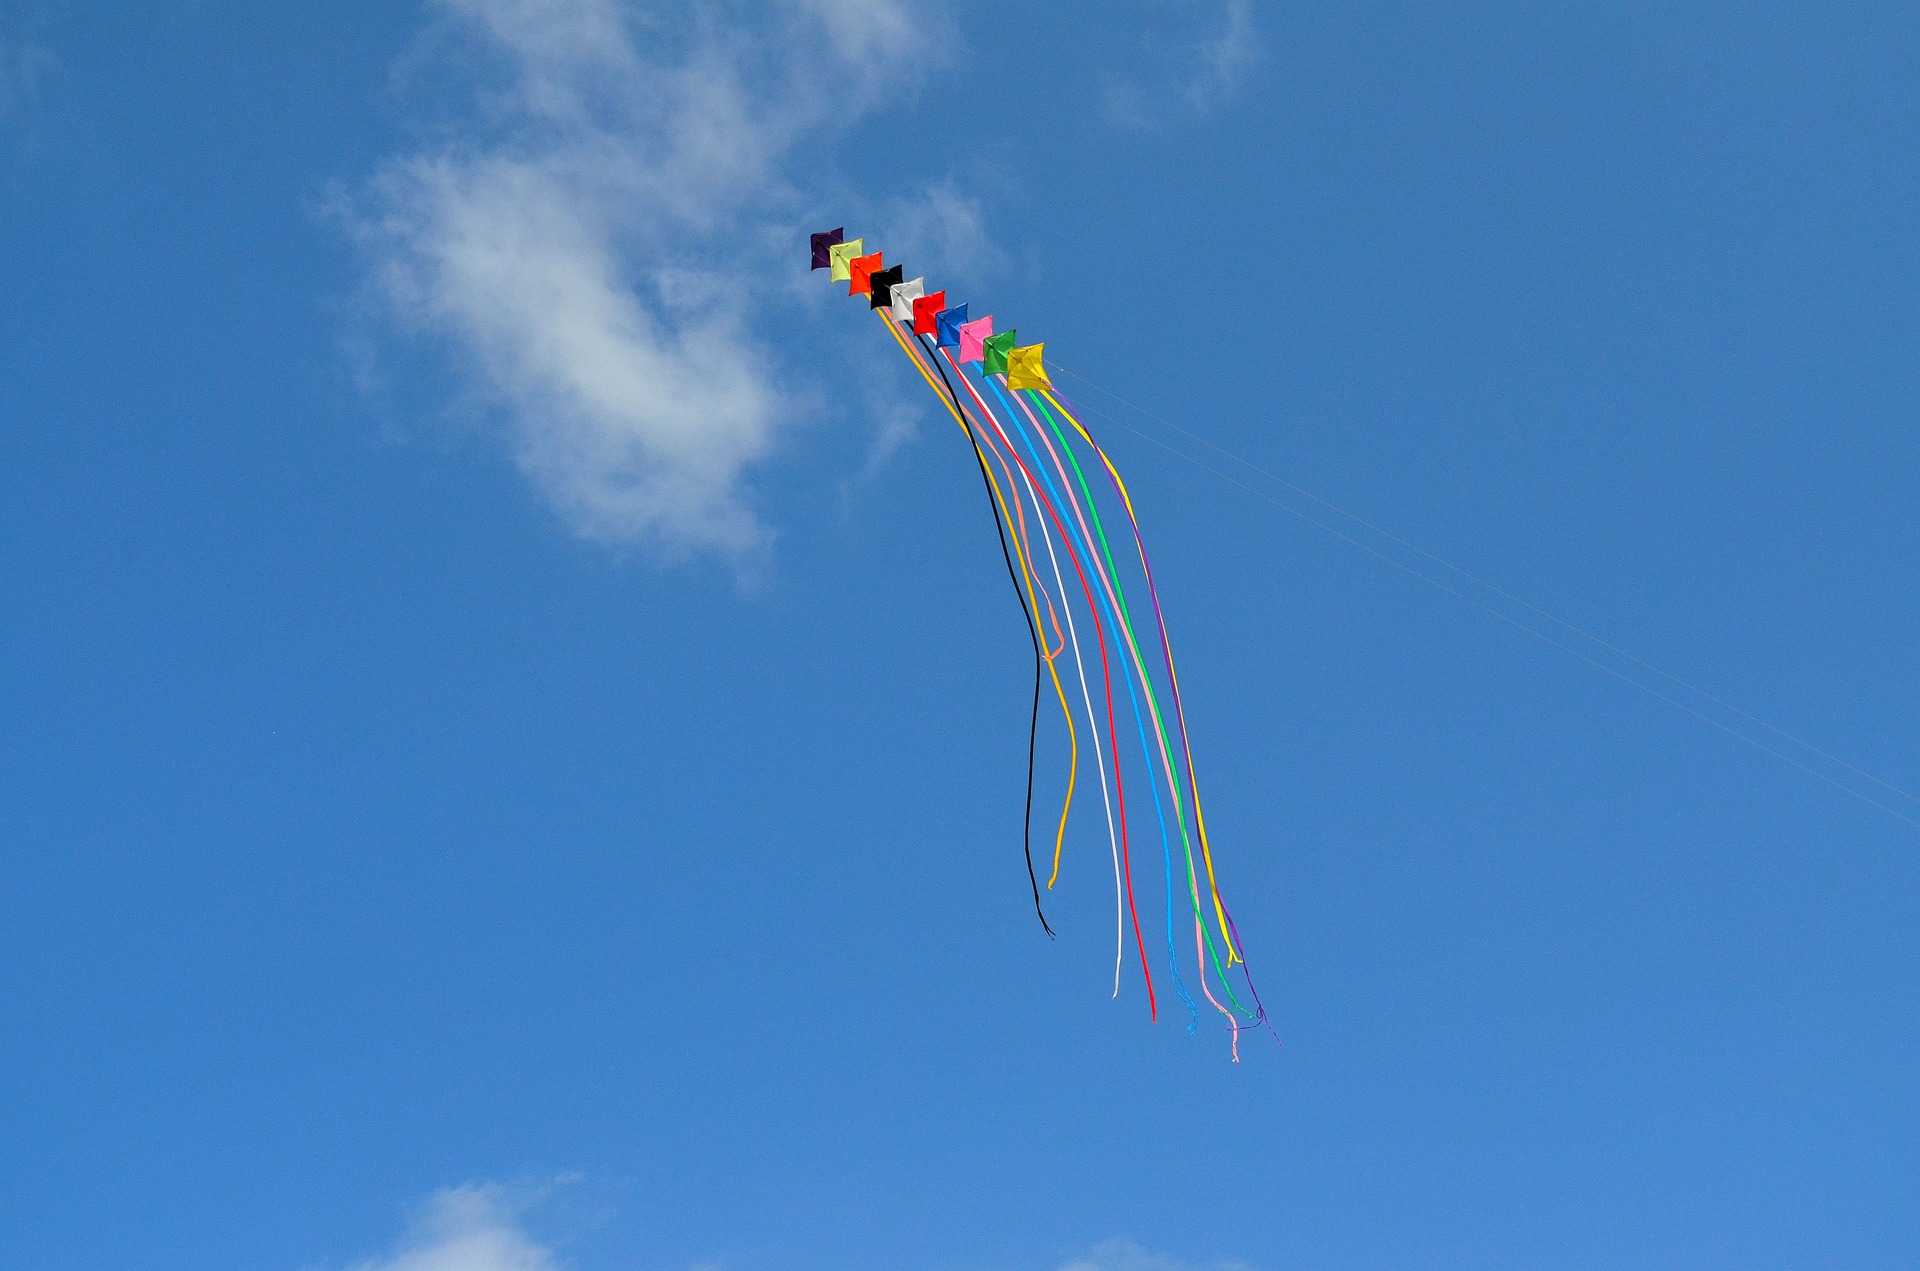 Dragon stunt kite.